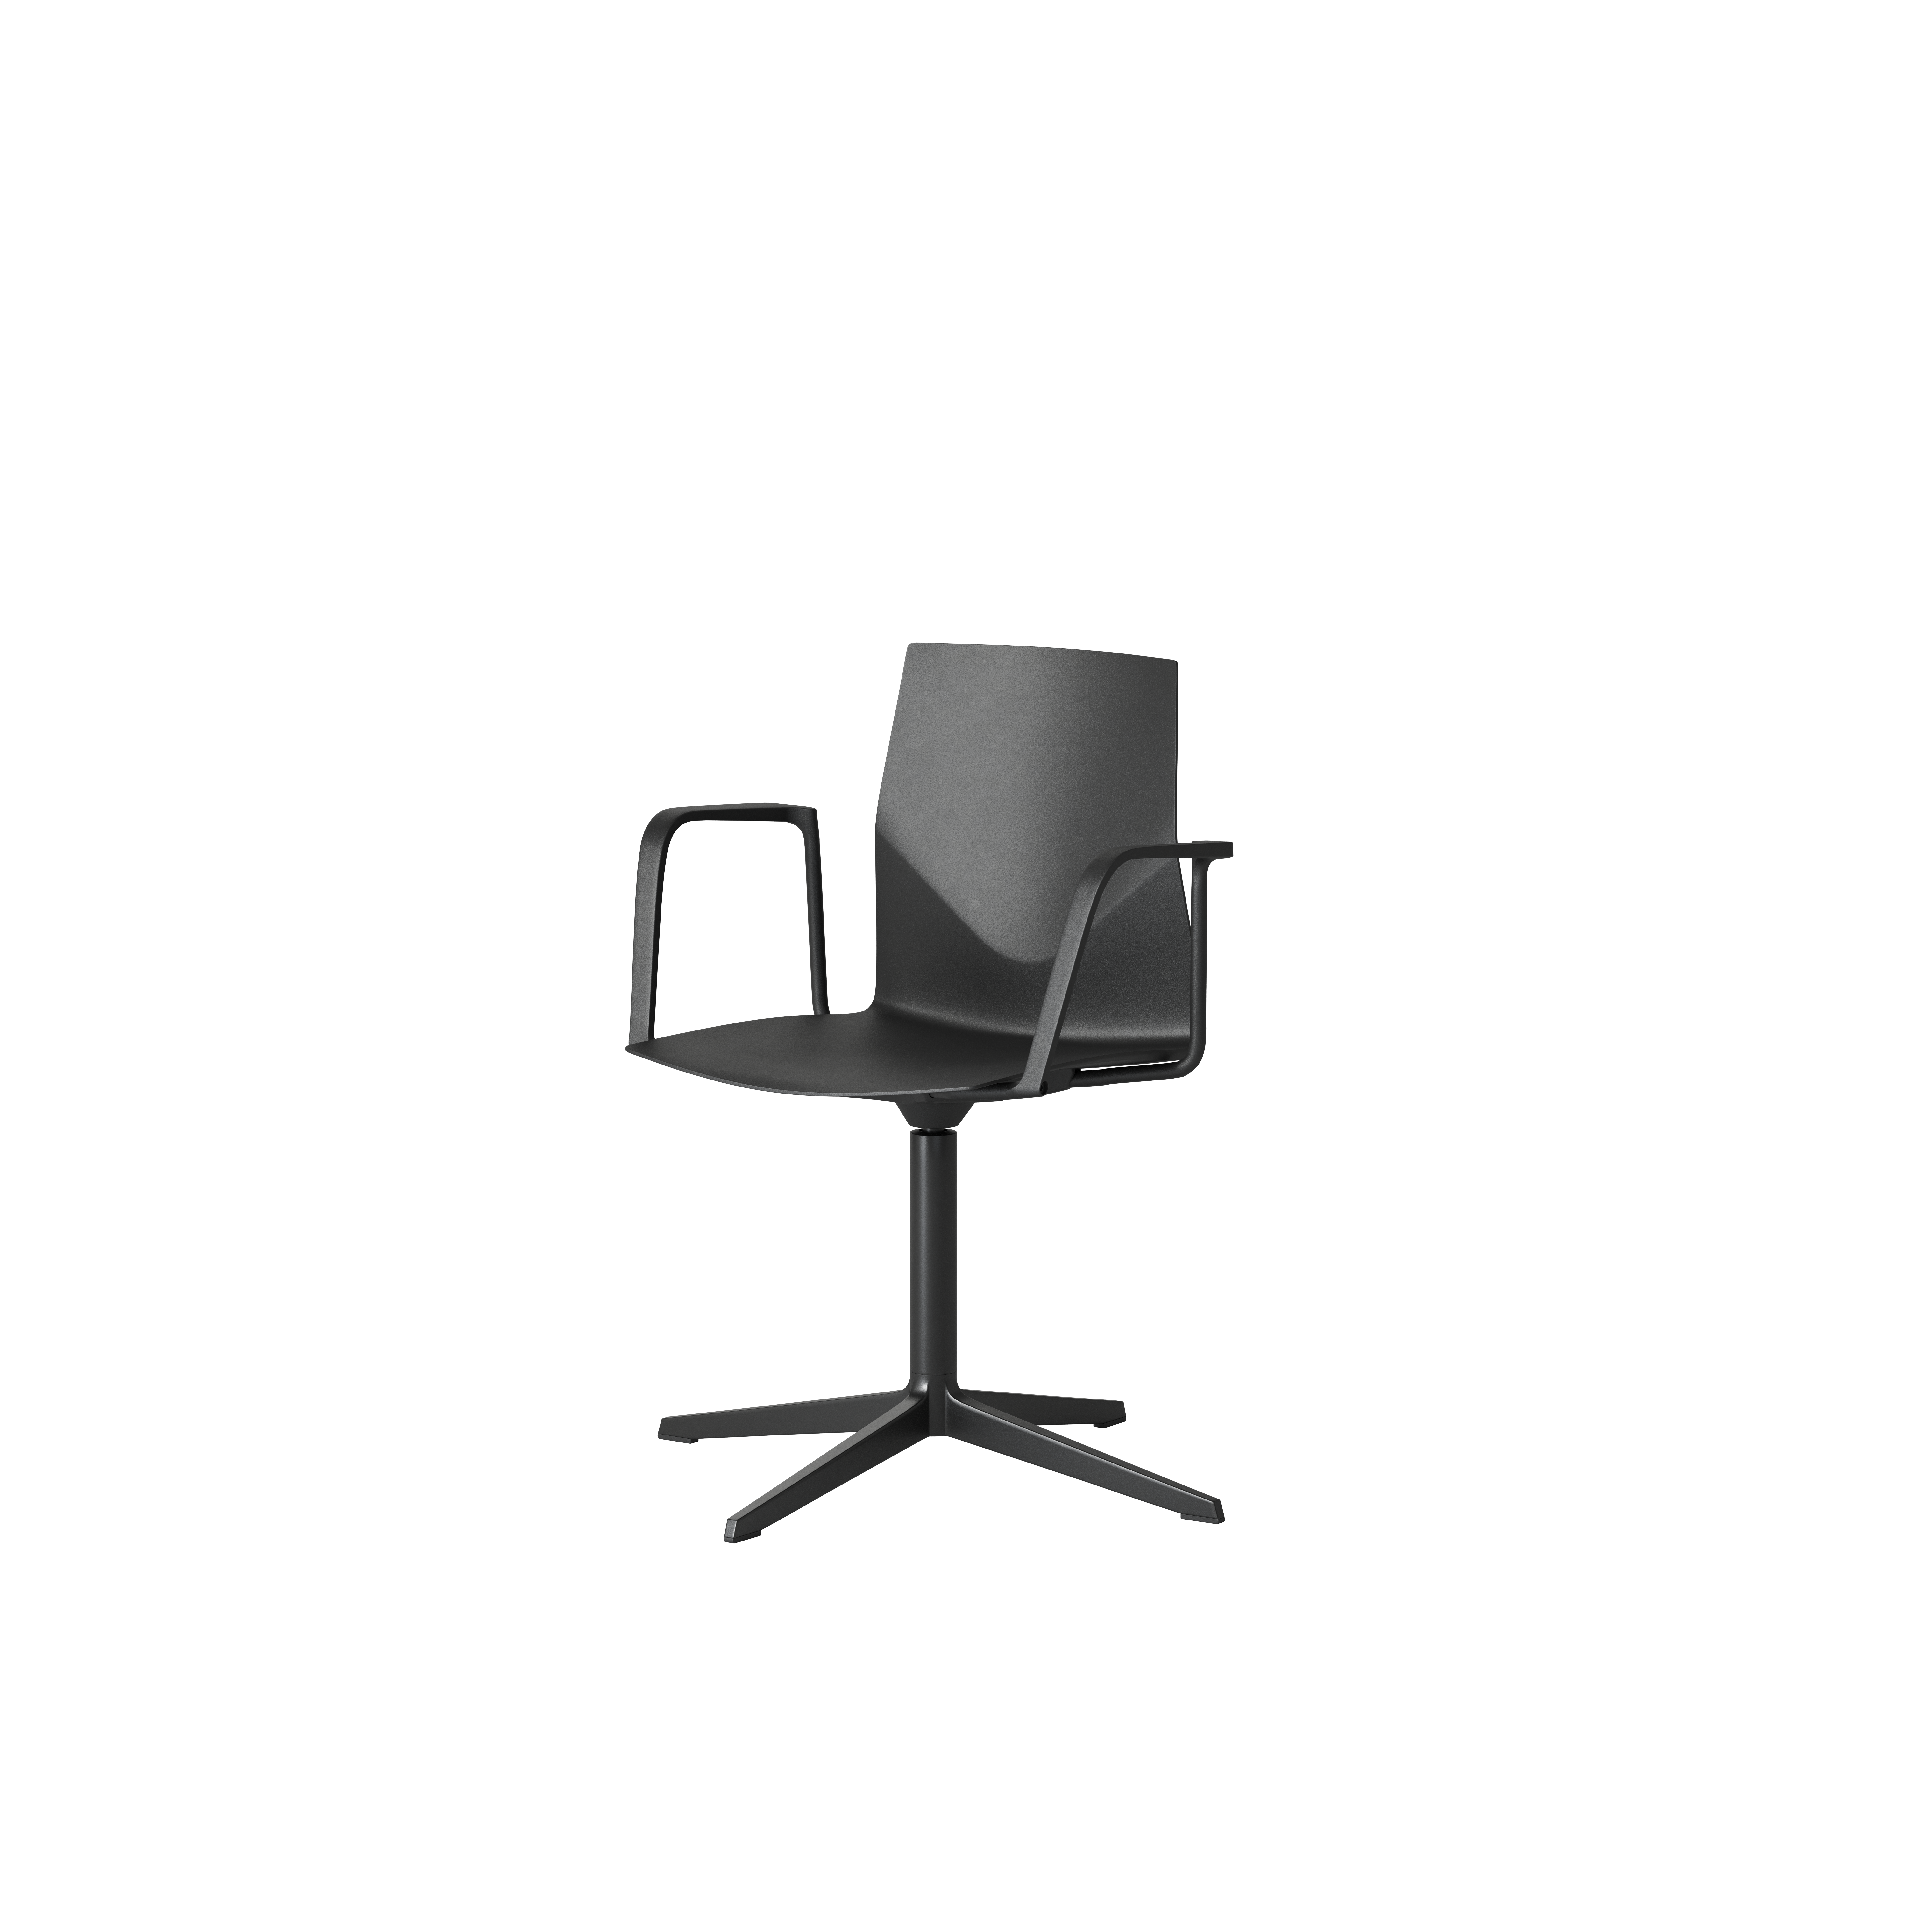 OCEE&FOUR – Chairs – FourCast 2 Evo – Plastic shell - Loop Armrest - Swivel - Packshot Image 5